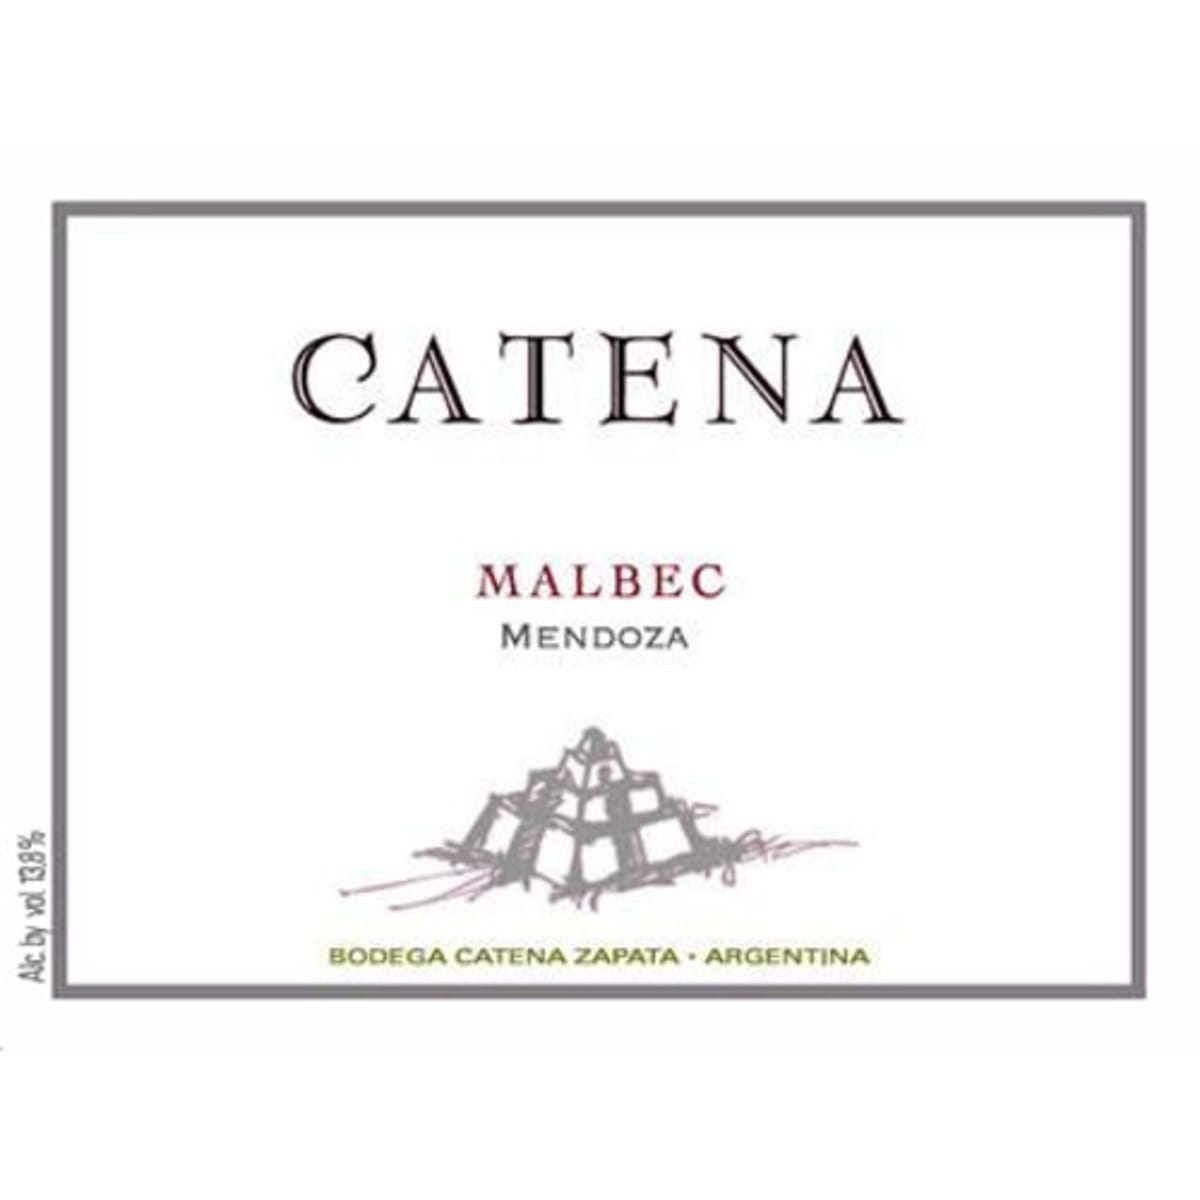 Catena Malbec 2005 Front Label